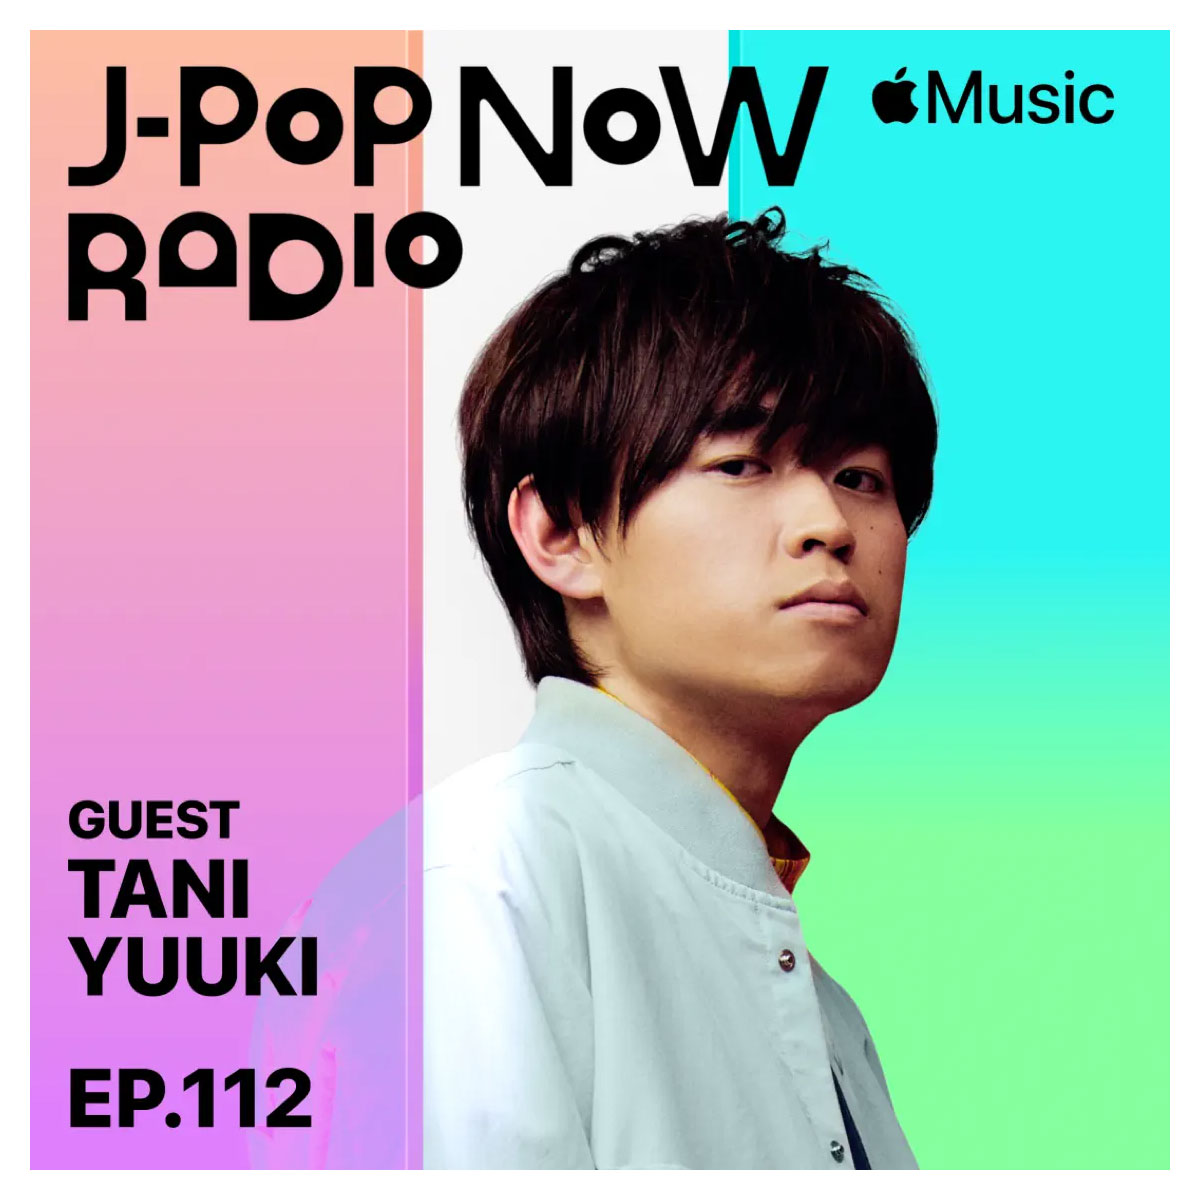 J-Pop Now Radio with Kentaro Ochiai ゲスト：Tani Yuuki